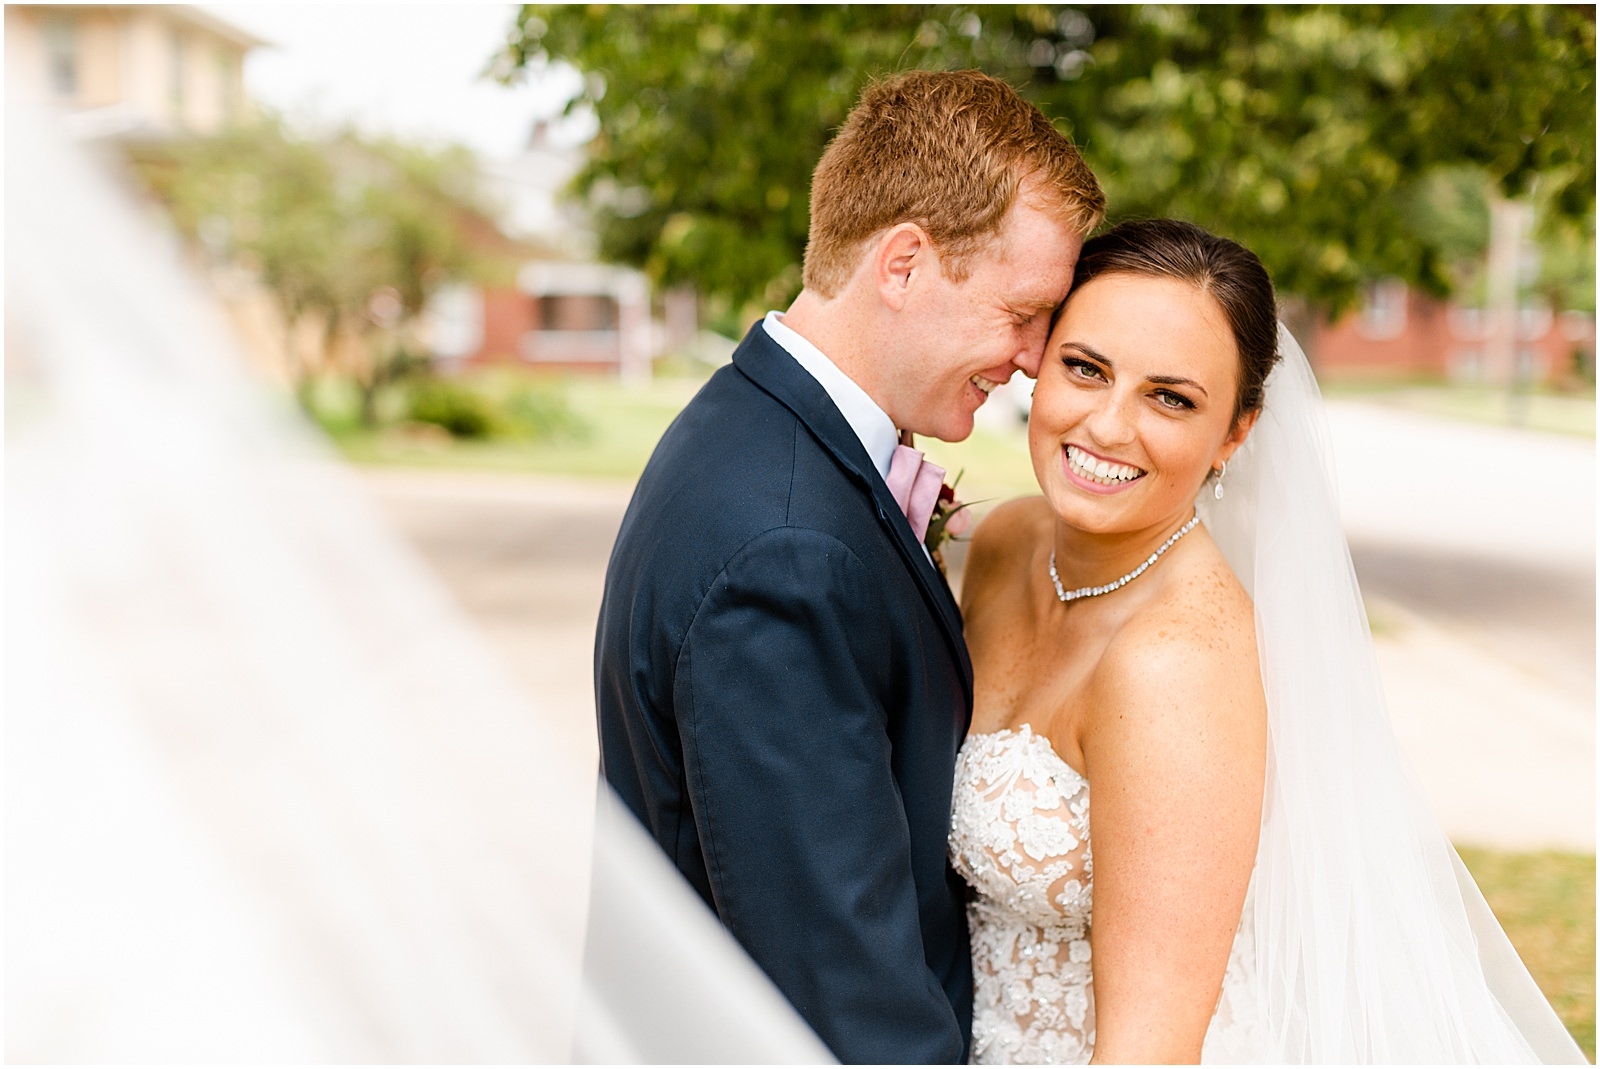 Deidra and Andrew | A Huntingburgh Indiana Wedding Bret and Brandie | Evansville Photographers | @bretandbrandie-0053.jpg